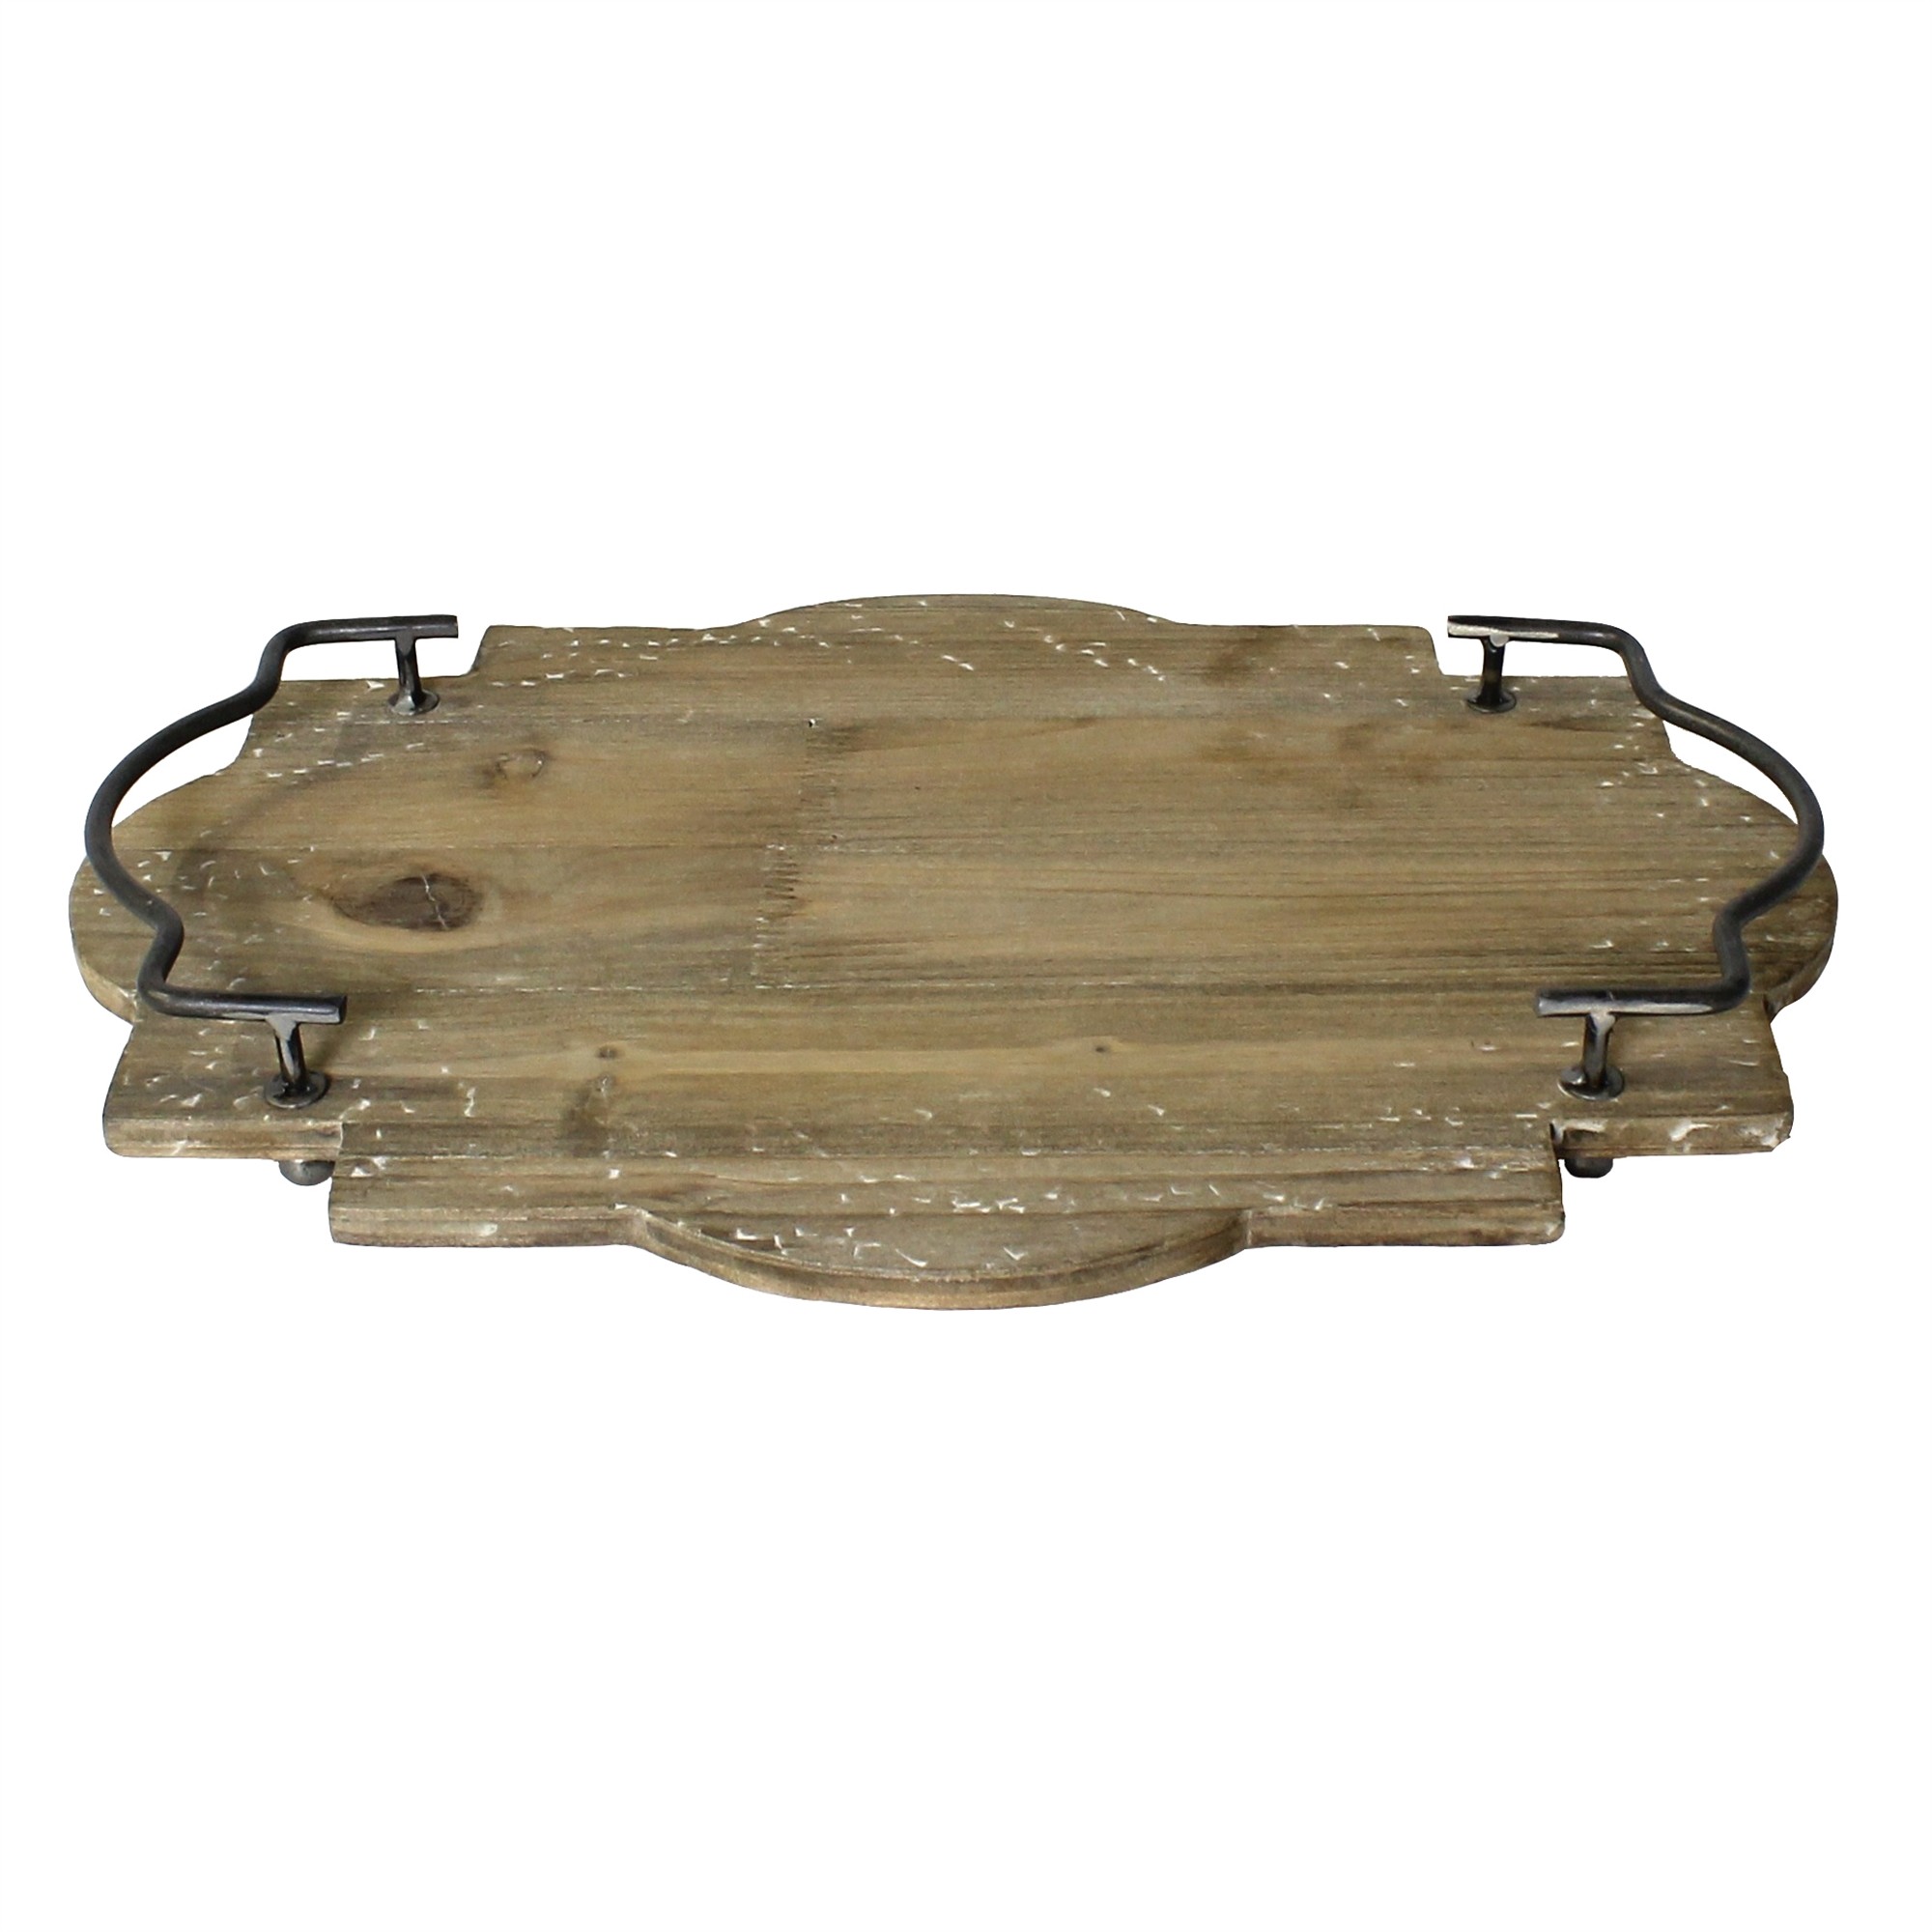 Jumbo Wooden Tray with Metal Handles